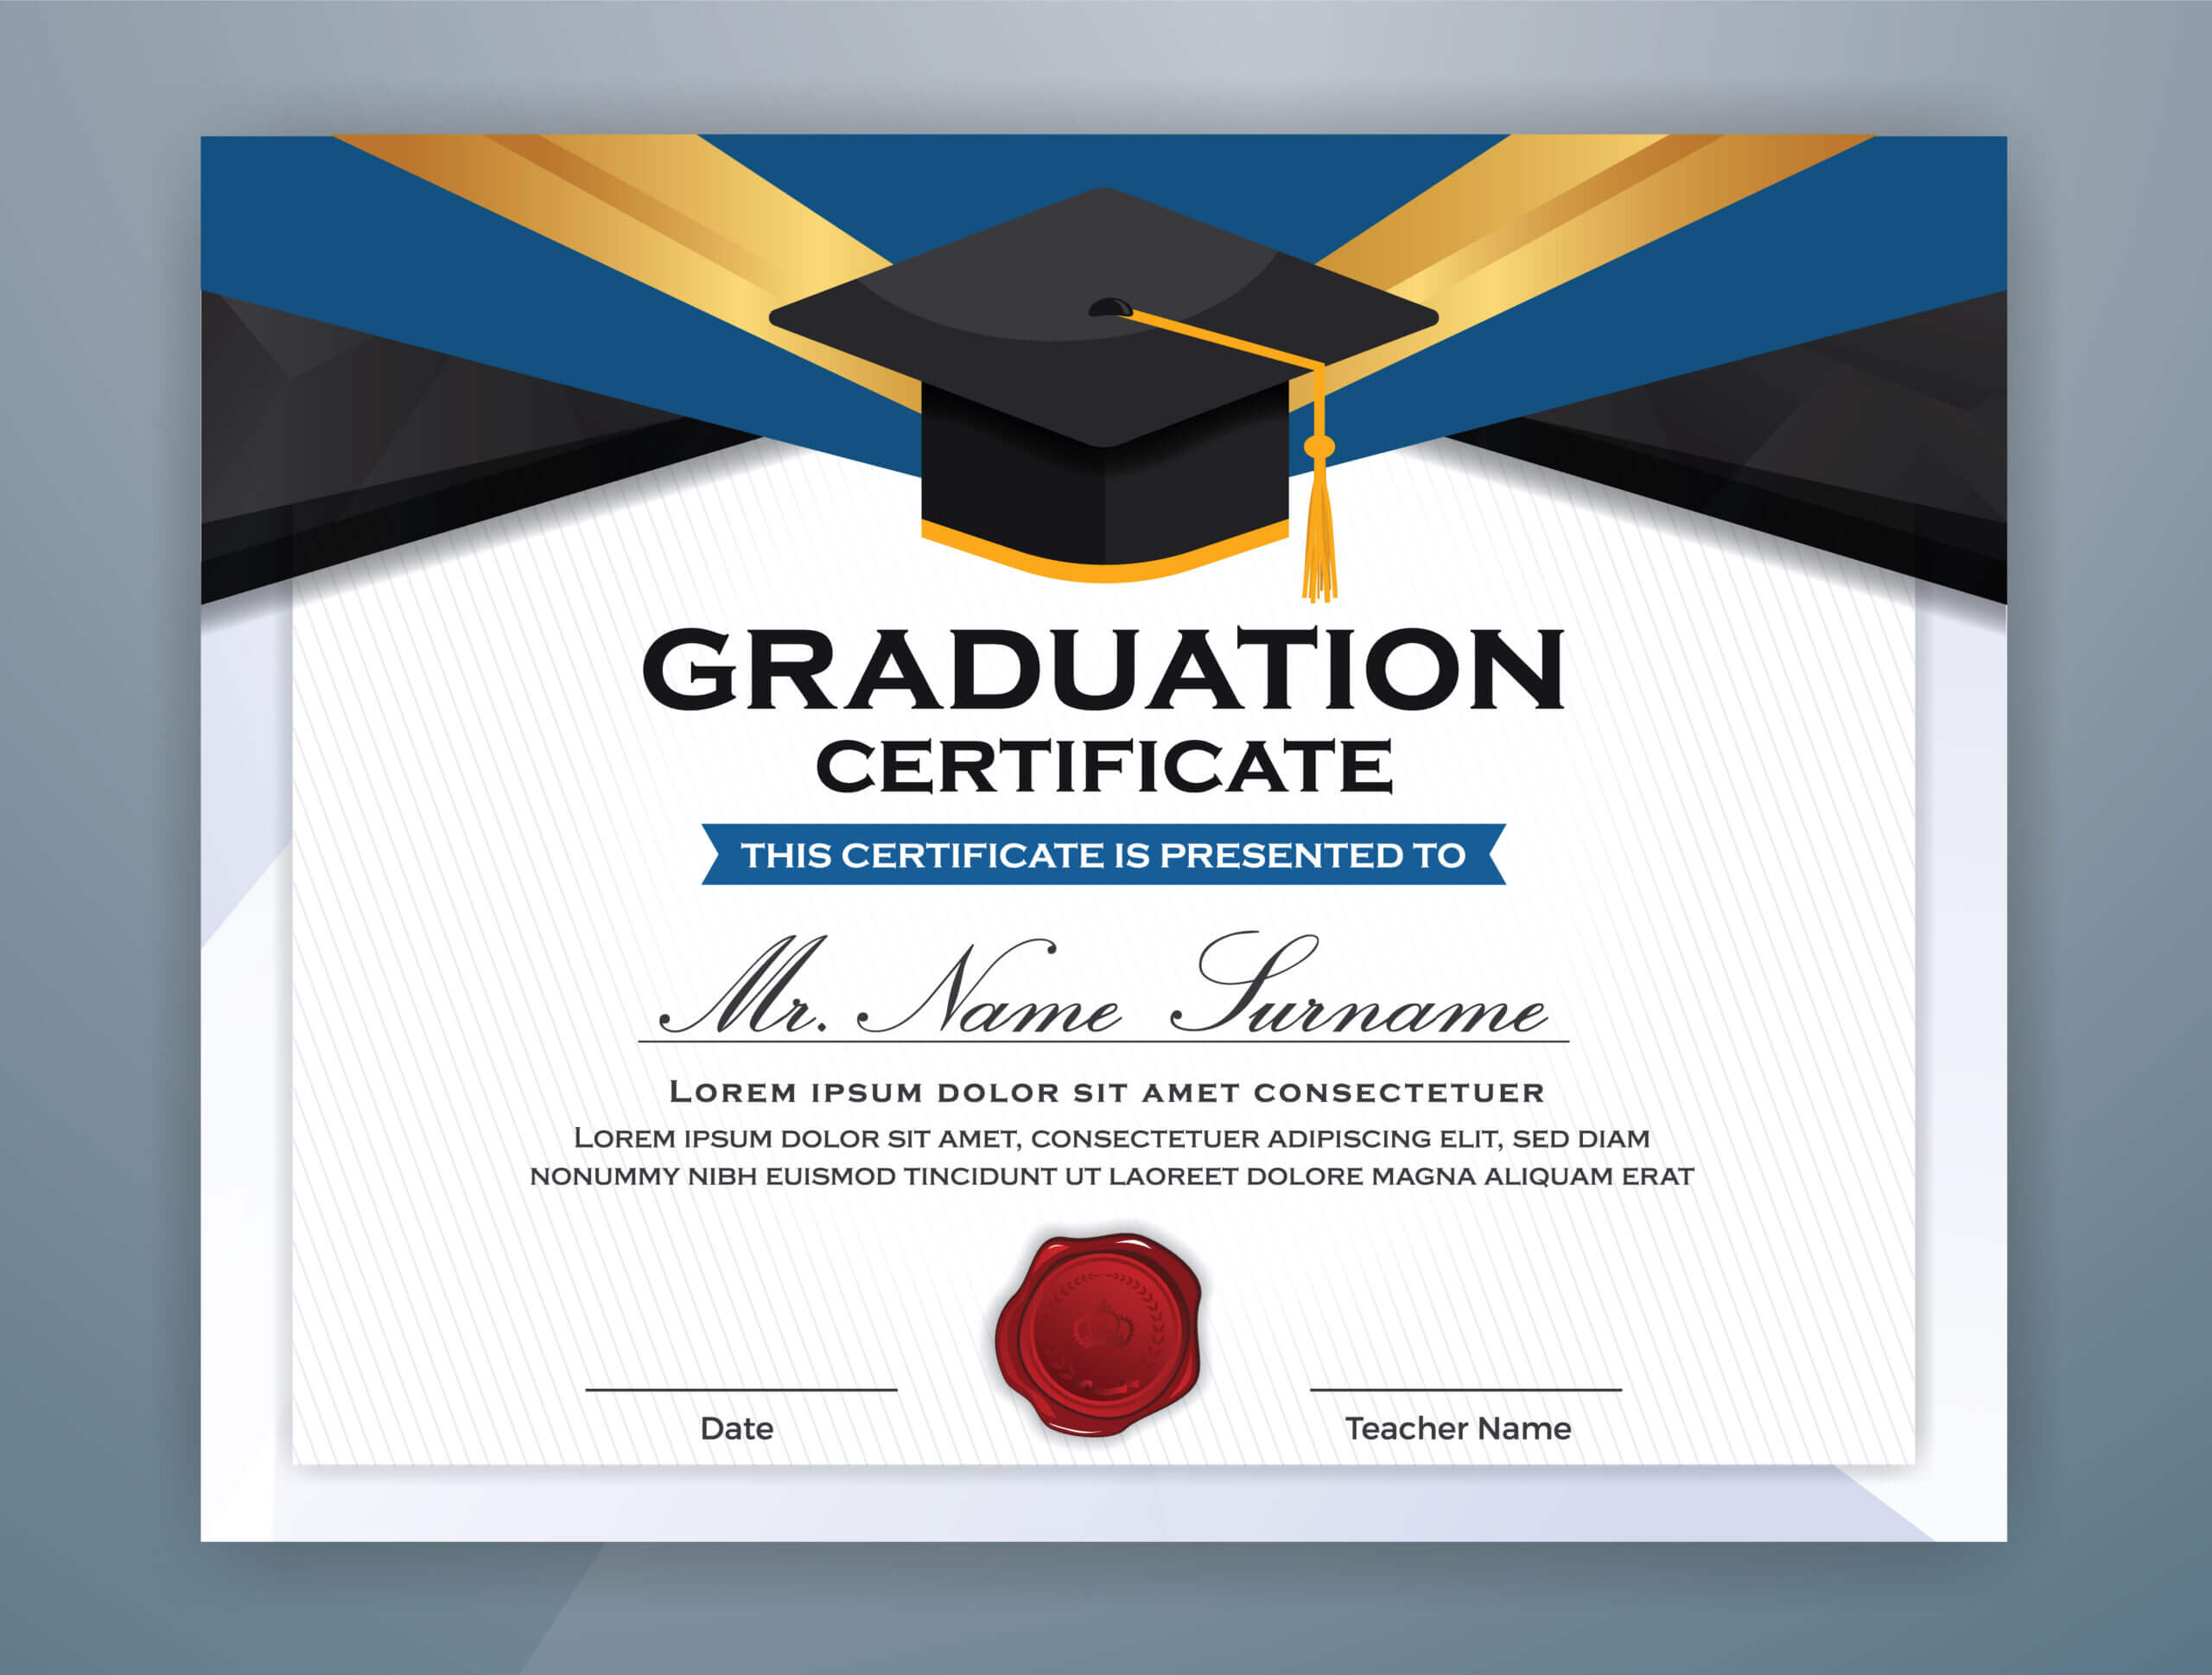 Graduation Certificate Free Vector Art – (4,527 Free Downloads) With Regard To Free School Certificate Templates